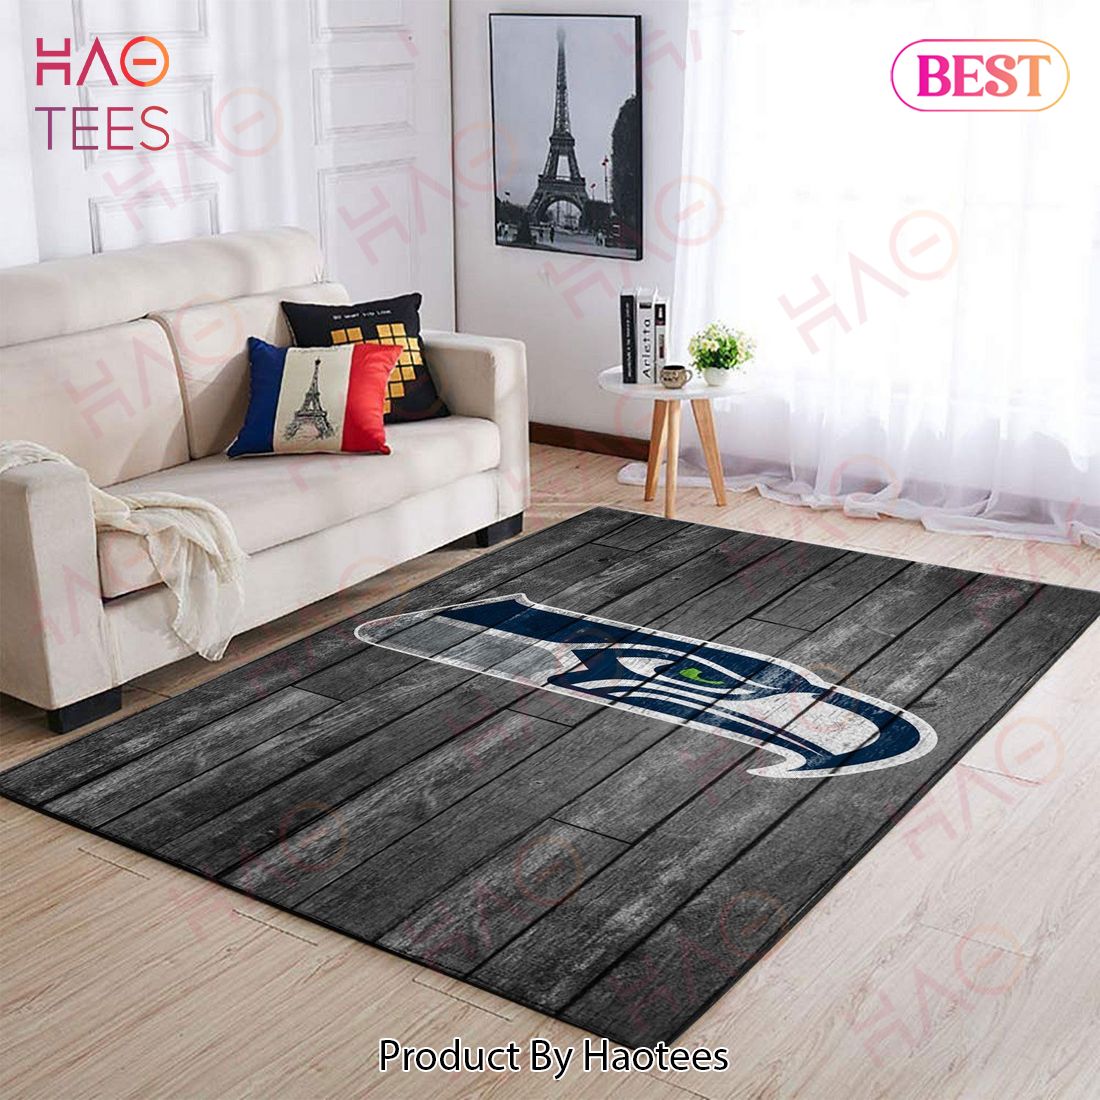 Seattle Seahawks Nfl Team Logo Grey Area Rugs Wooden Style Living Room Carpet Sports Rug Regtangle Carpet Floor Decor Home Decor